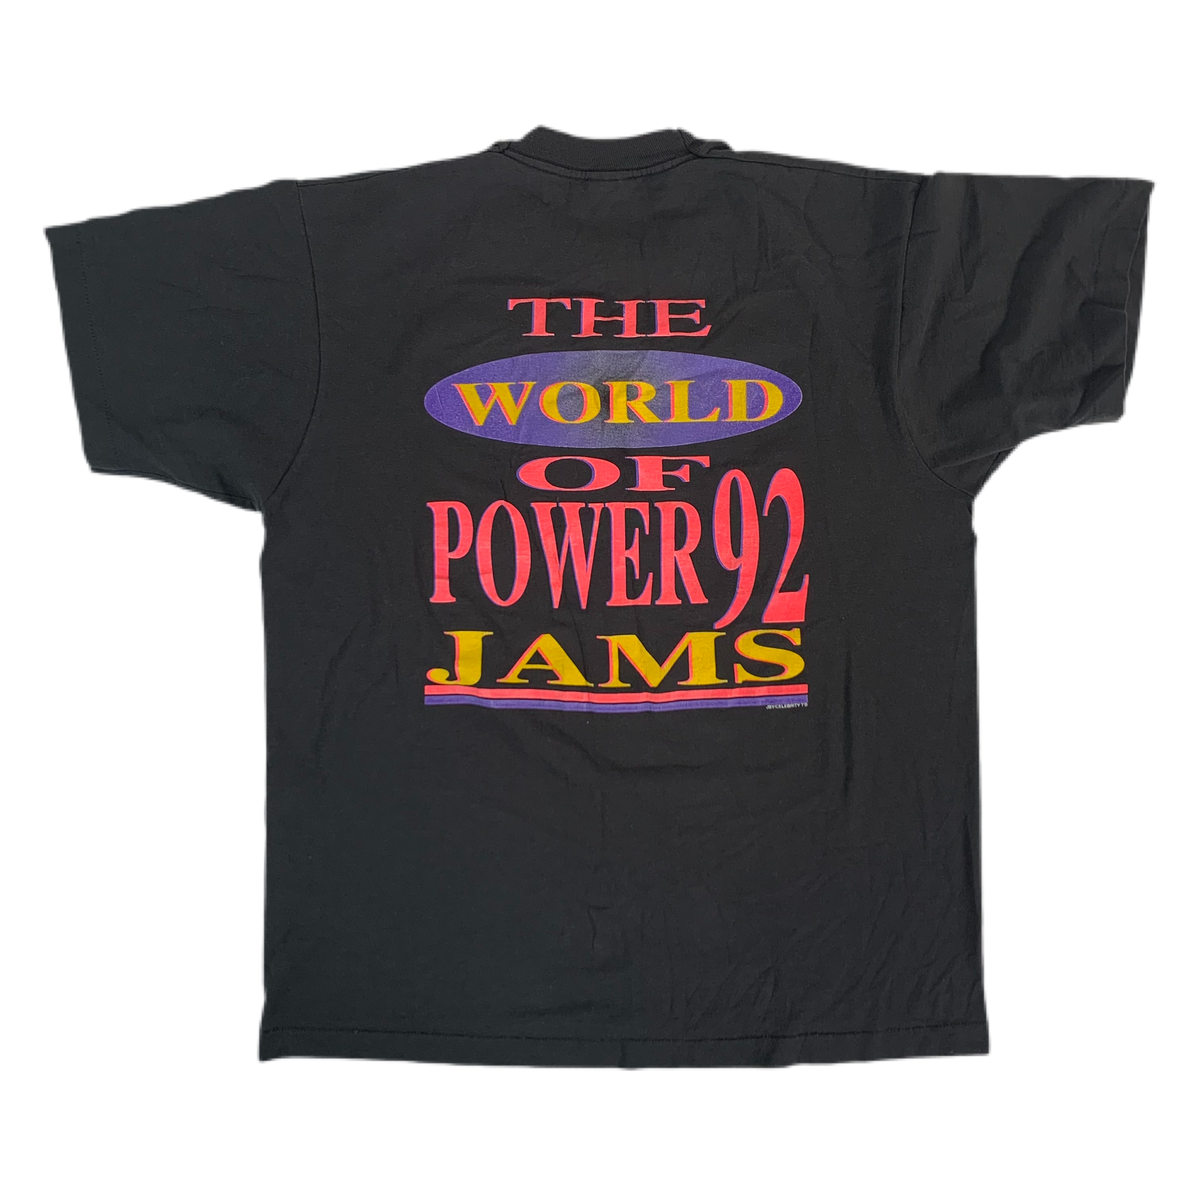 Vintage Powerhouse &quot;The World Of Power 92 Jams&quot; T-Shrit